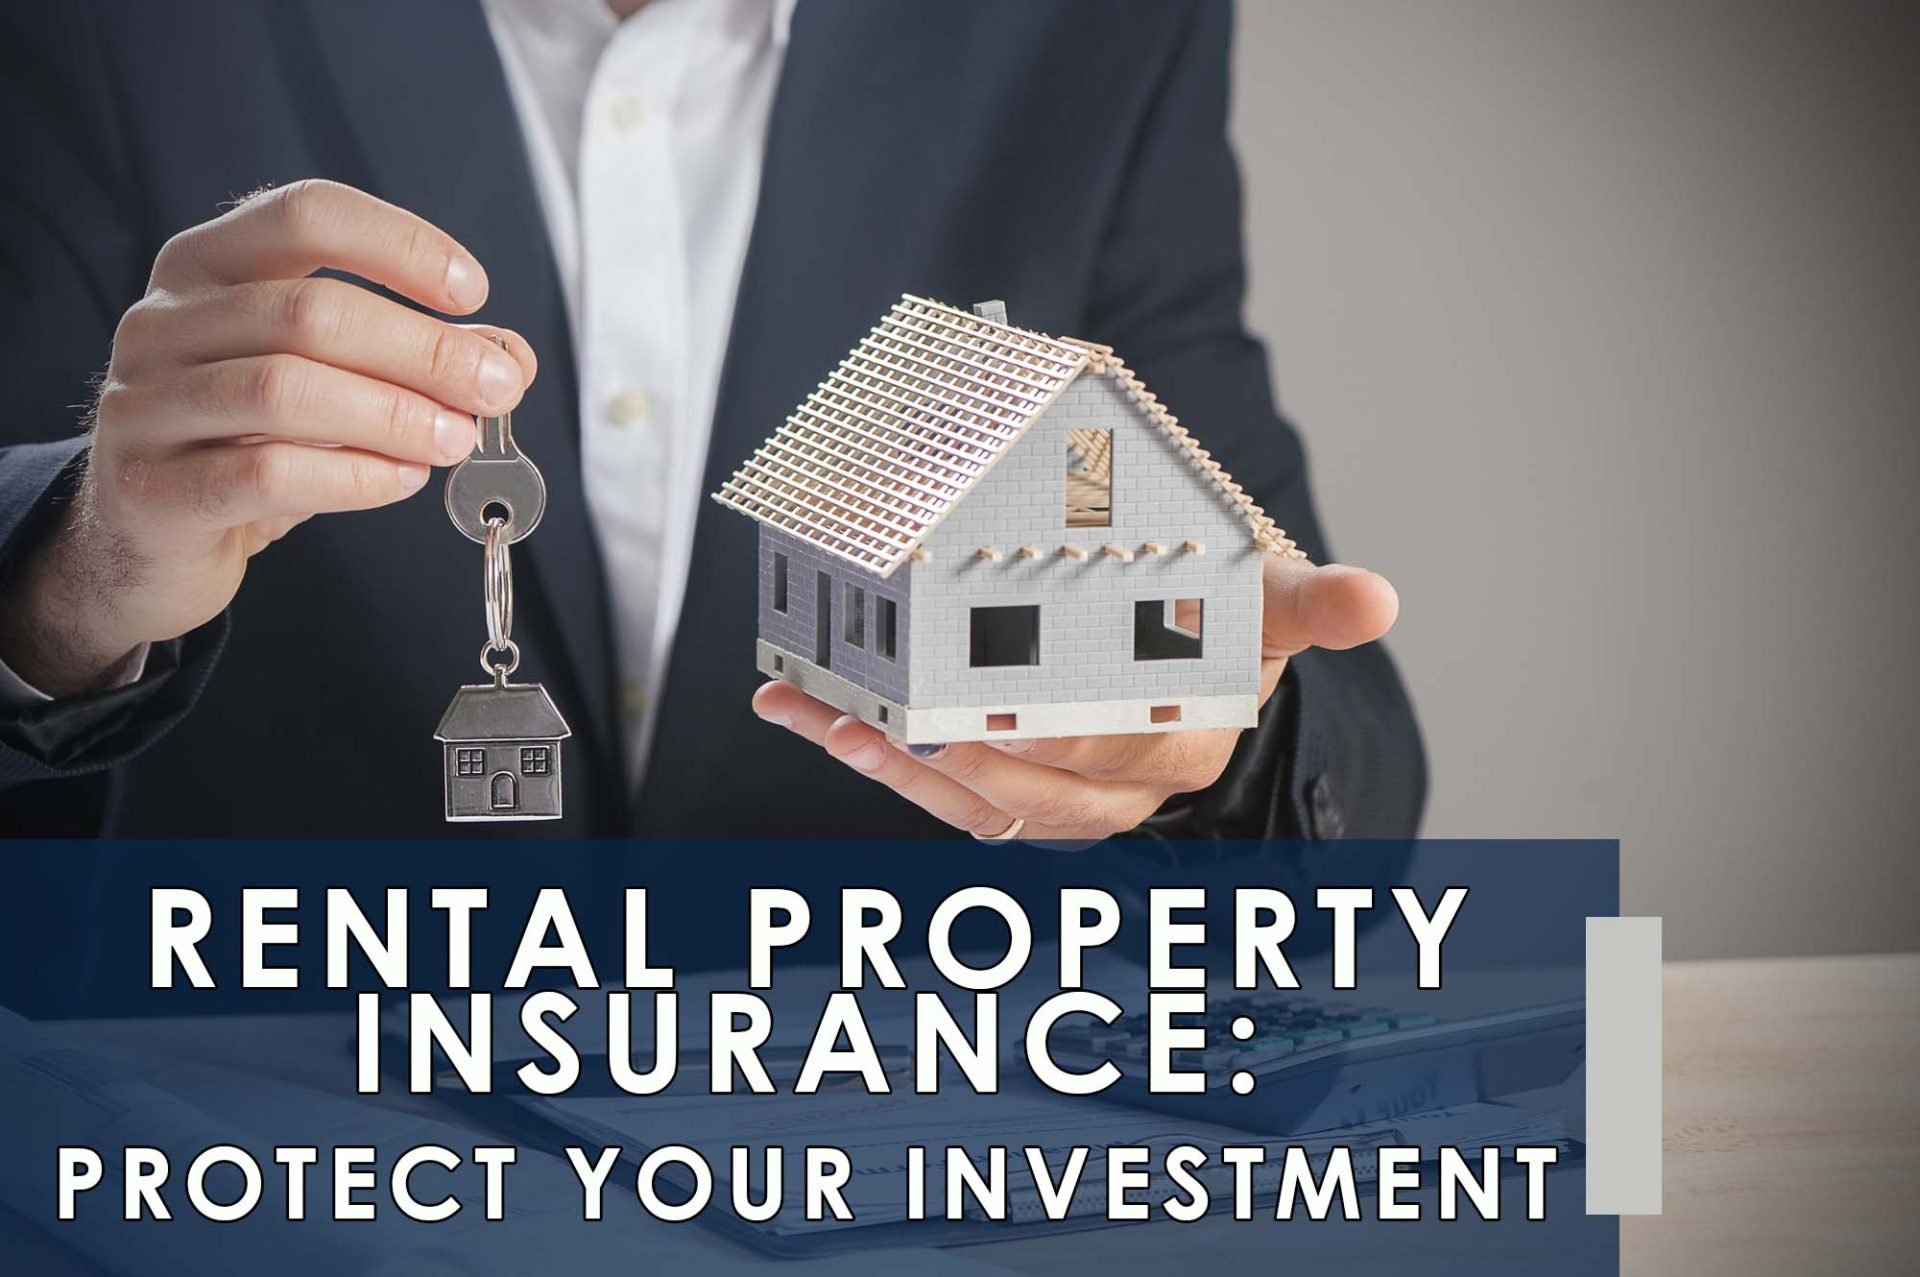 Rental Property Owner Insurance